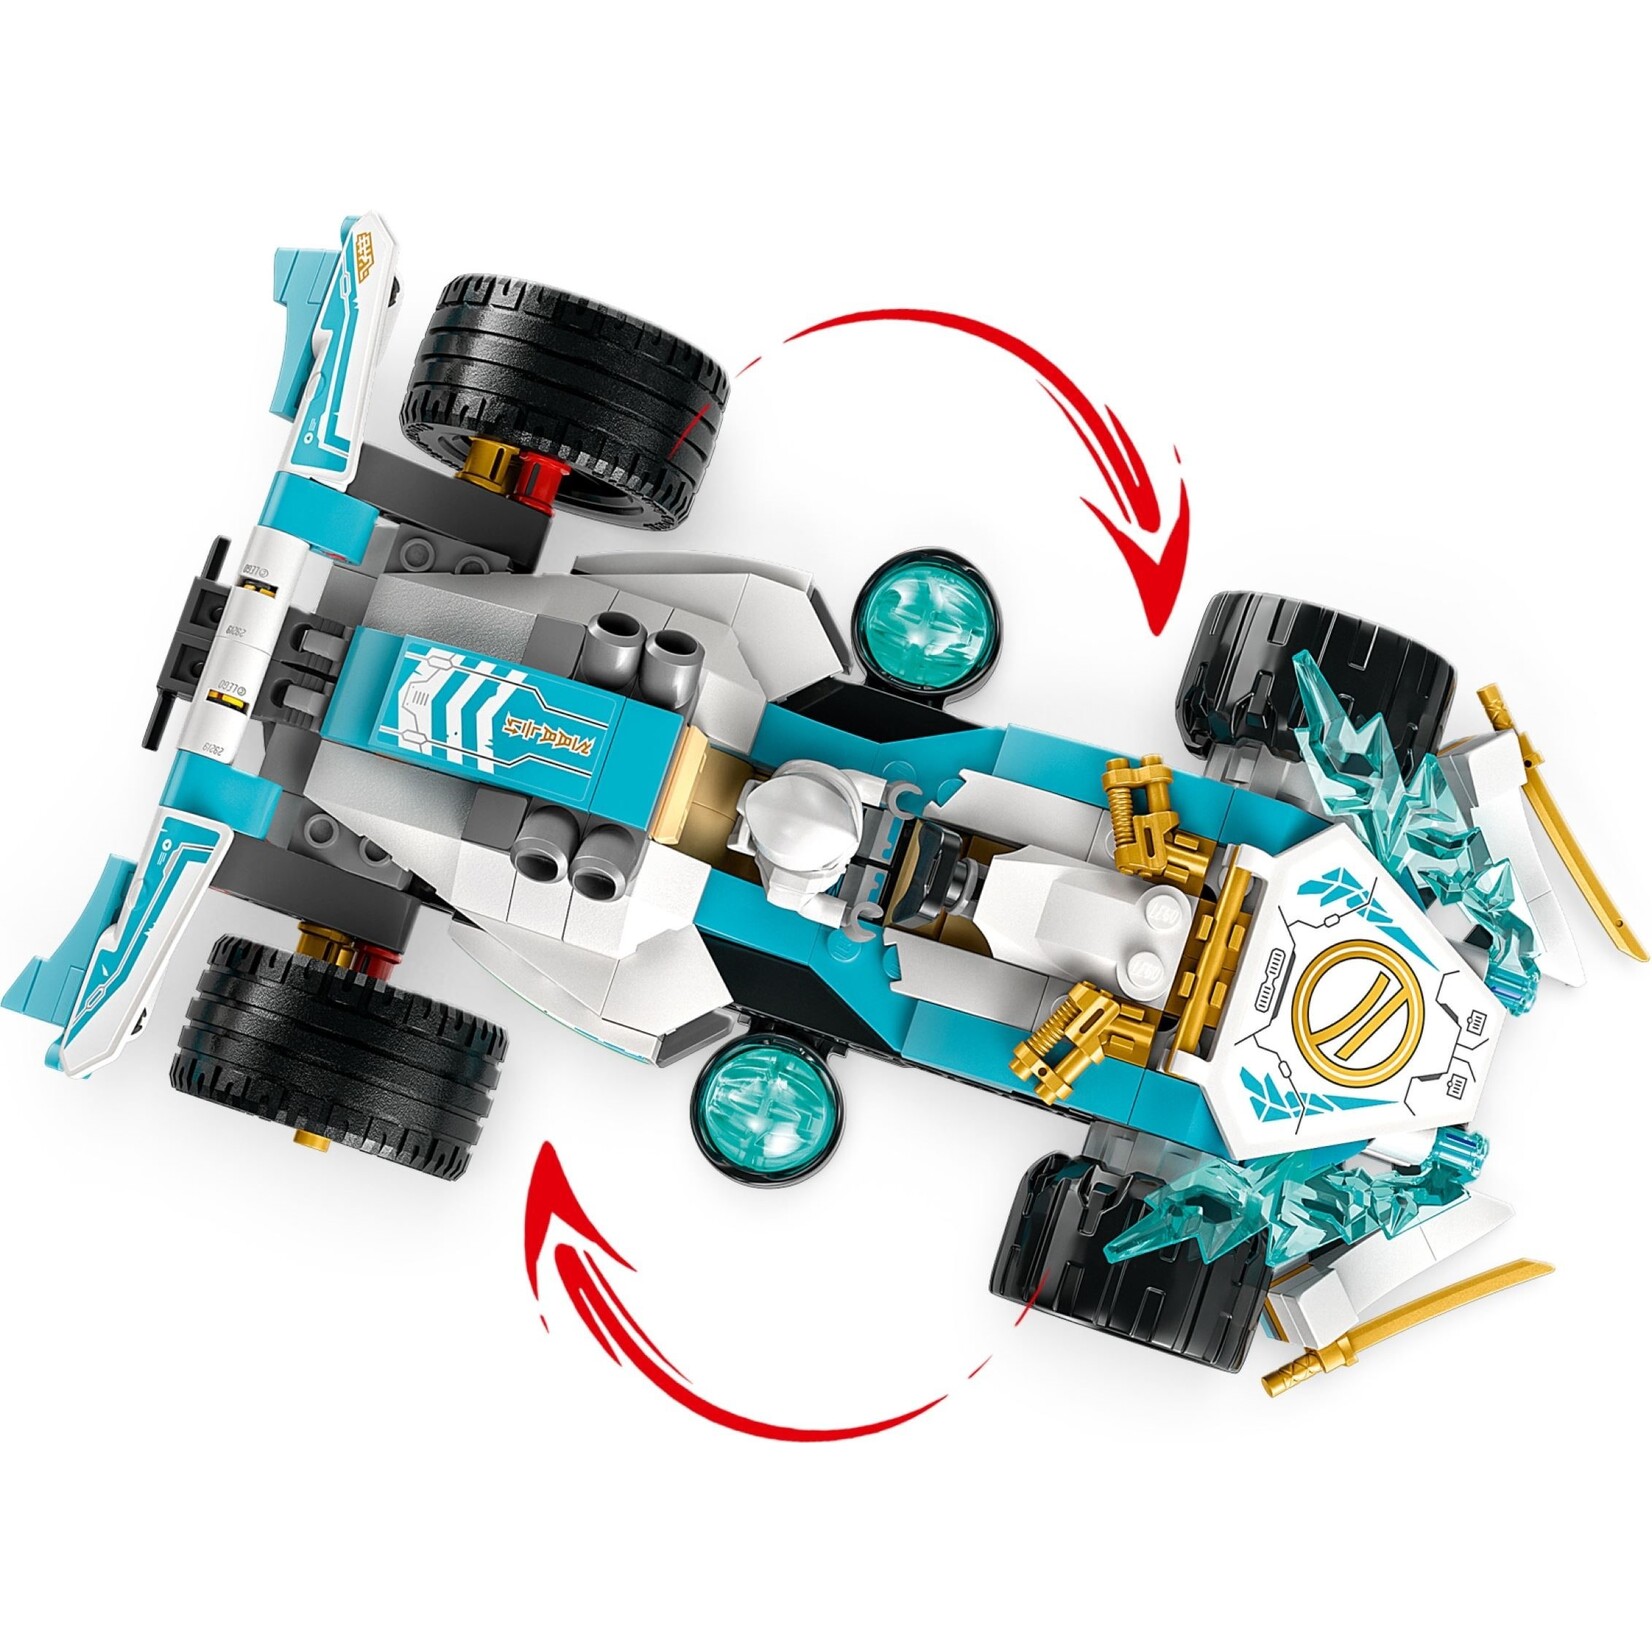 LEGO Zane’s drakenkracht Spinjitzu racewagen - 71791